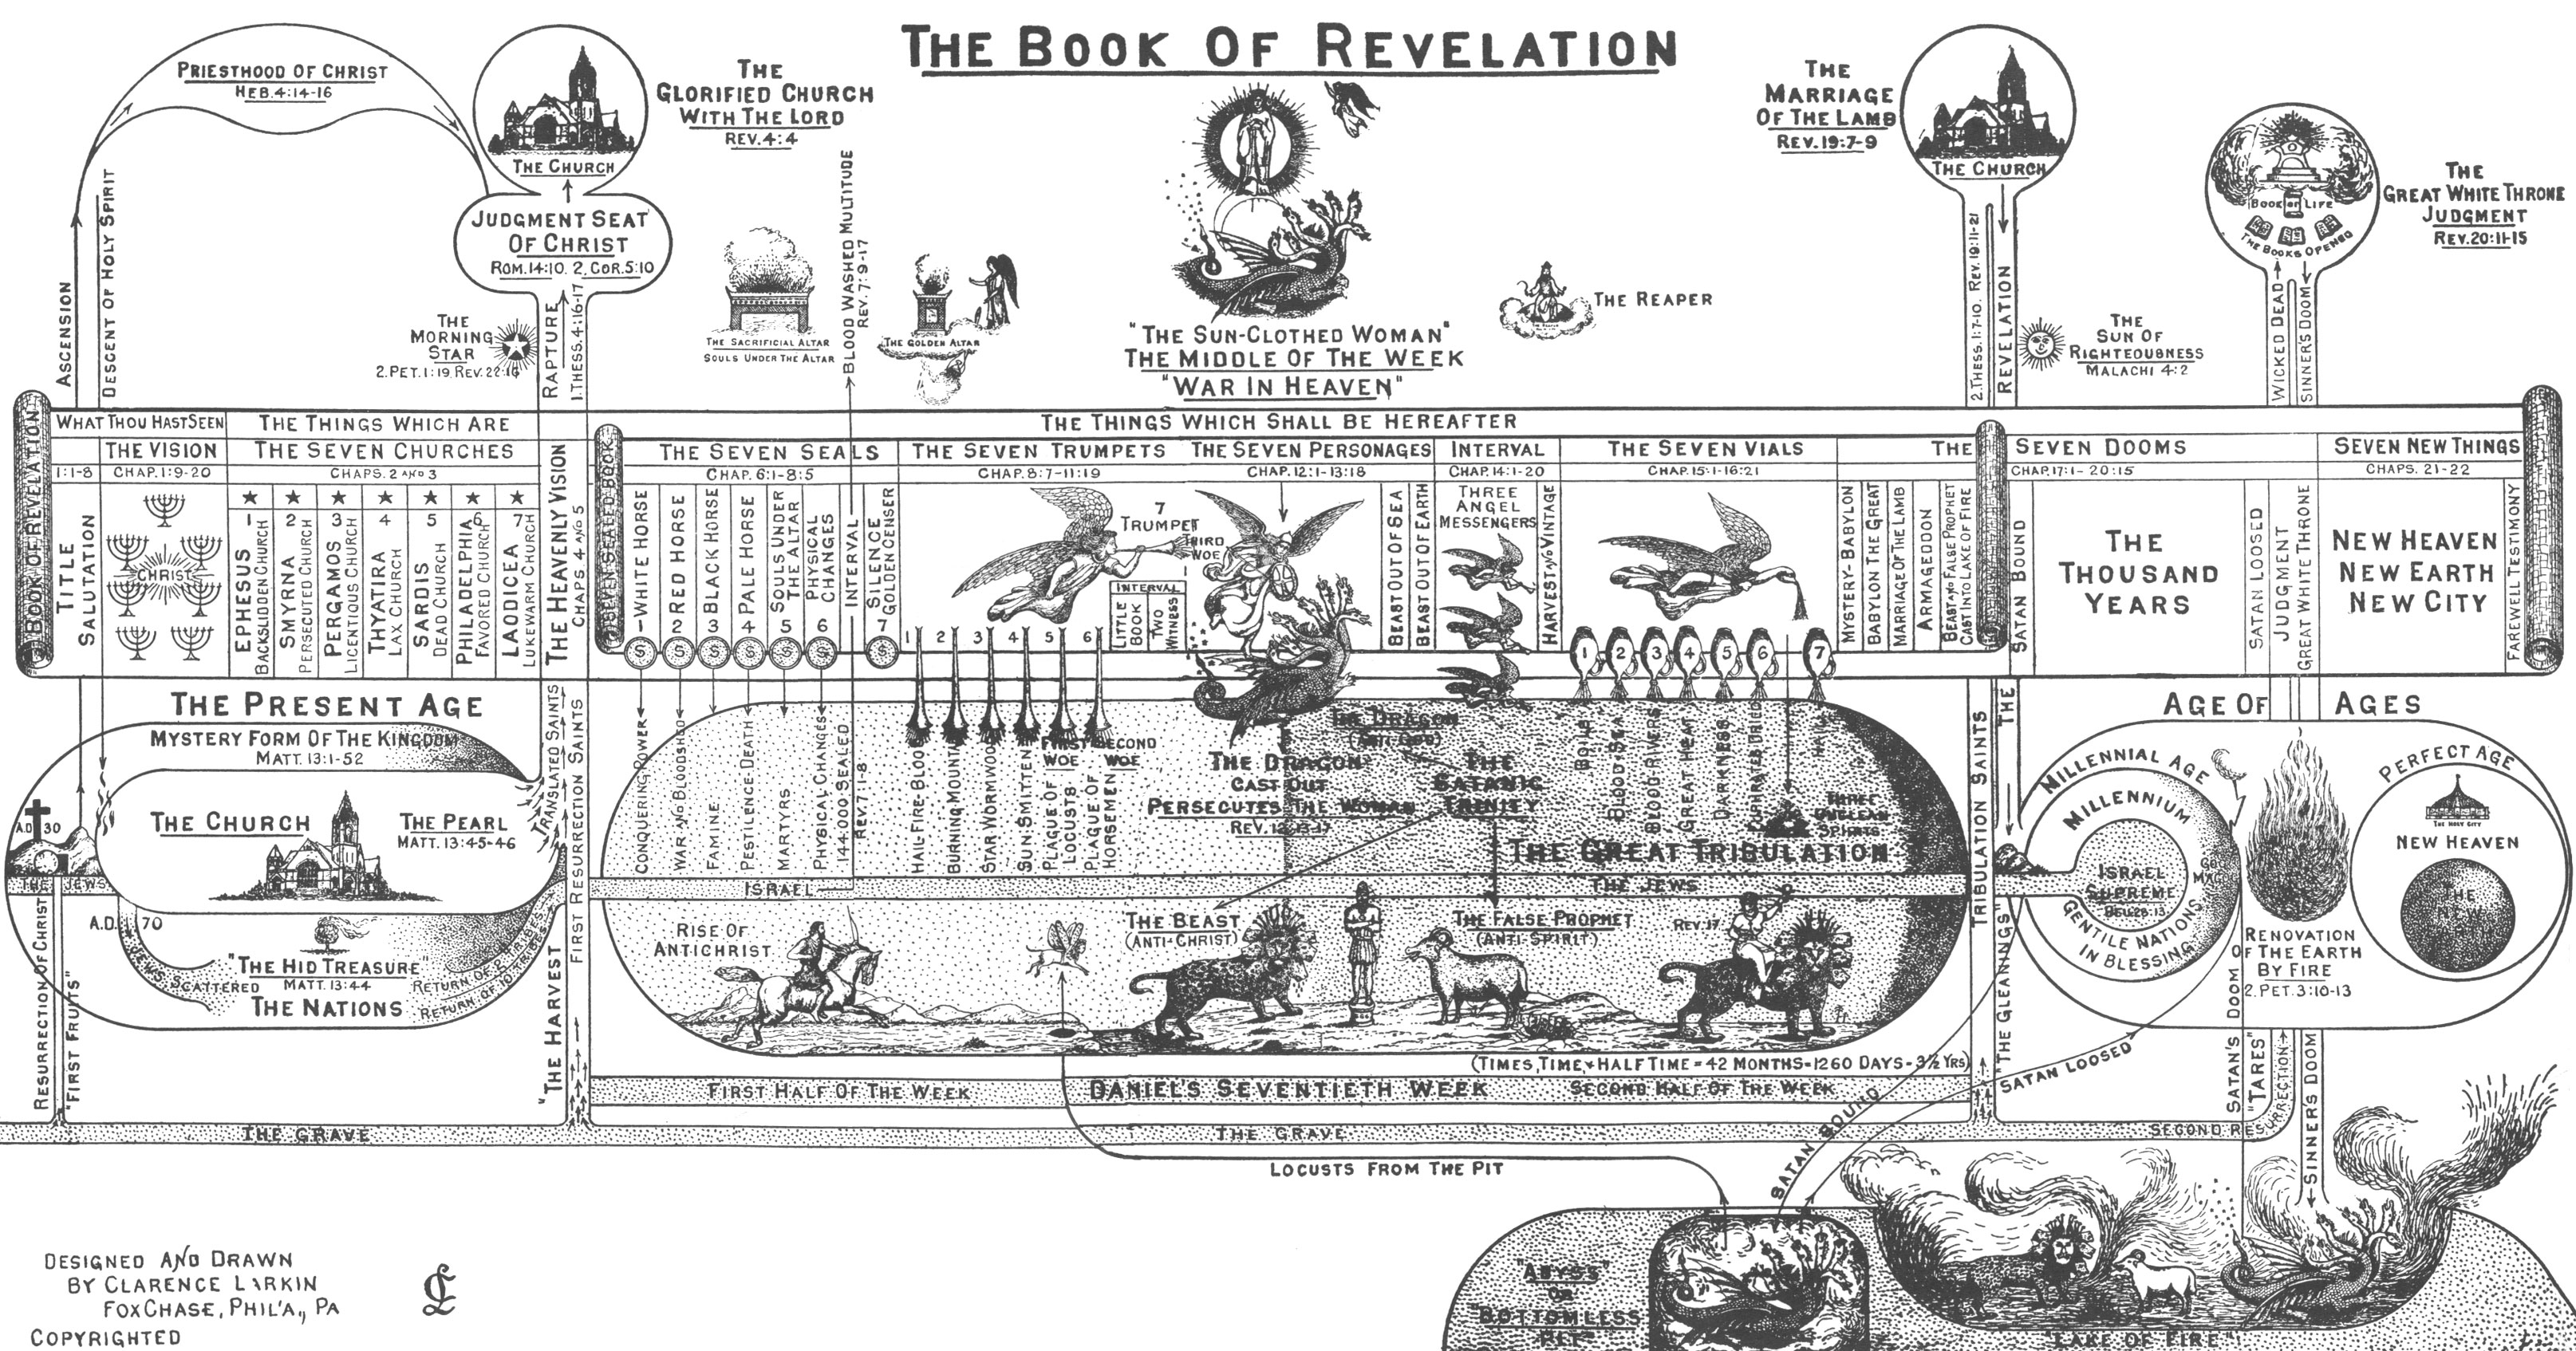 Chronology Of Revelation Chart